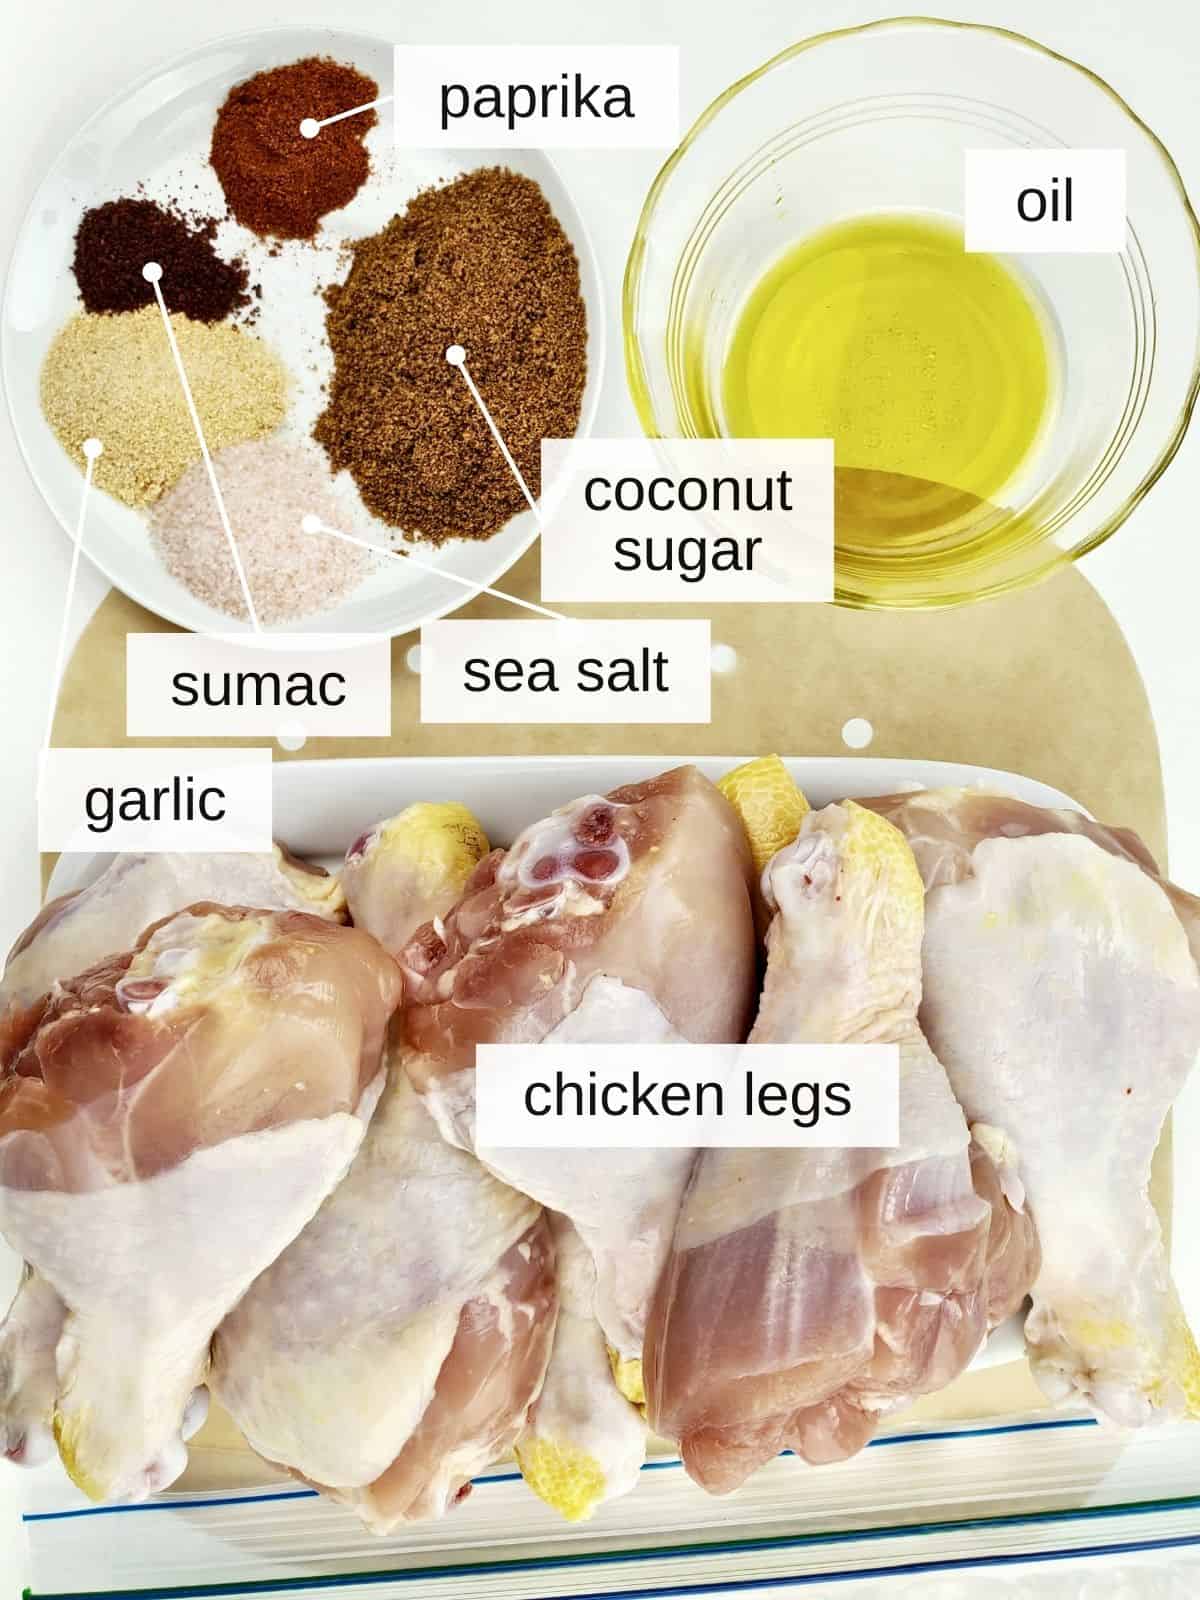 ingredients for air fryer chicken legs, including oil, garlic, sumac, sea salt, coconut sugar, paprika, and chicken legs.